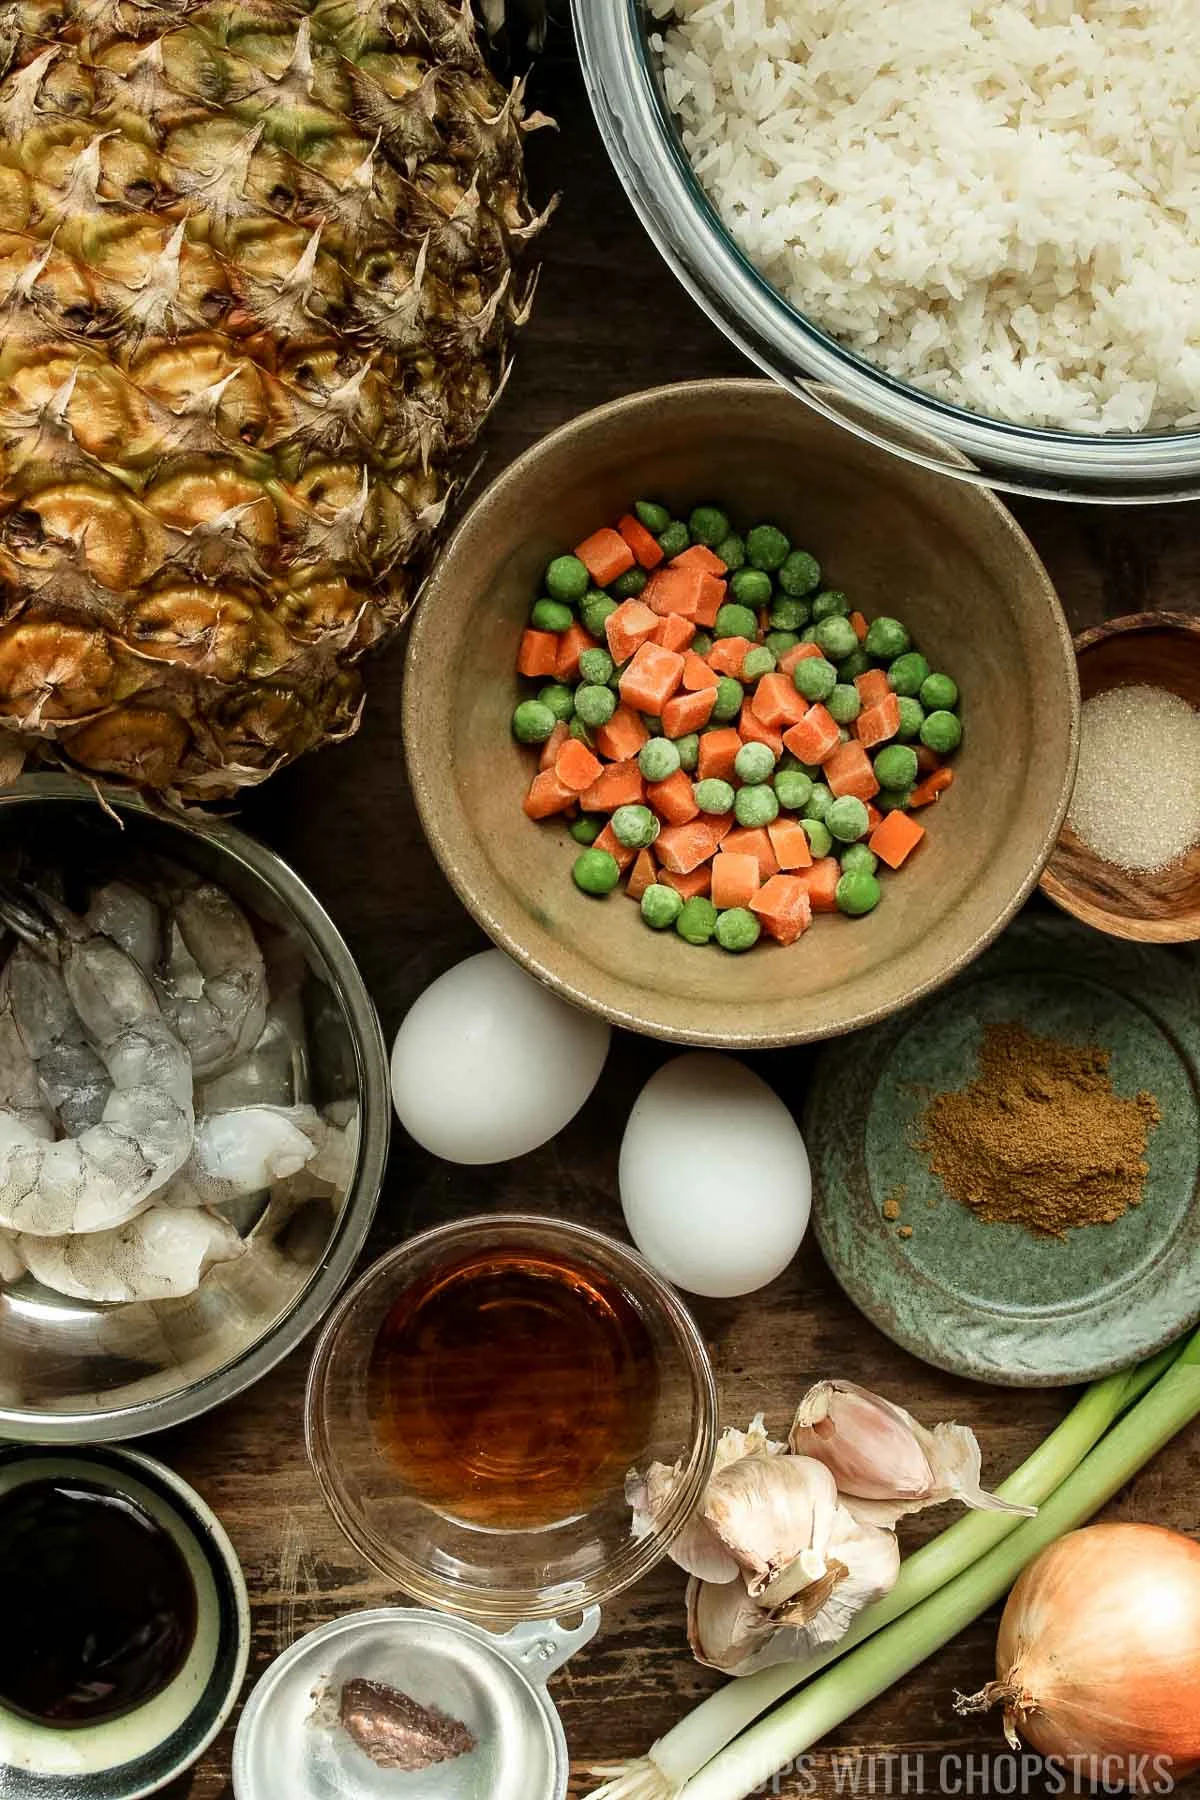 thai pineapple rice ingredients (curry powder, fish sauce, shrimp, frozen veg, rice, pineapple, eggs, garlic, onions)